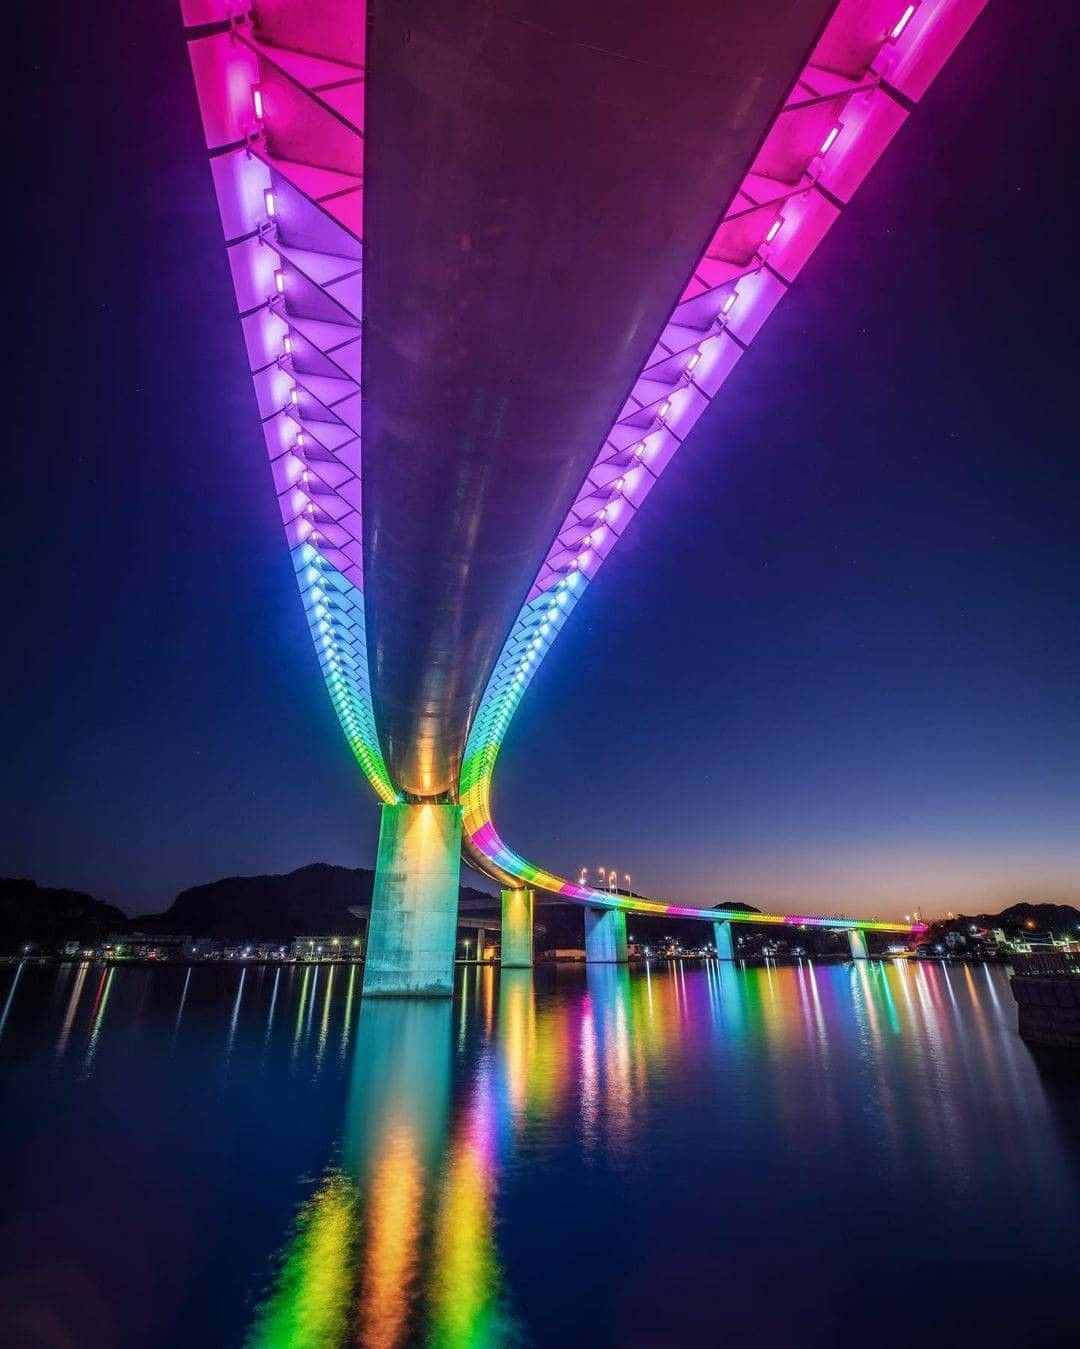 Beauty in Nature, Rainbow Bridge